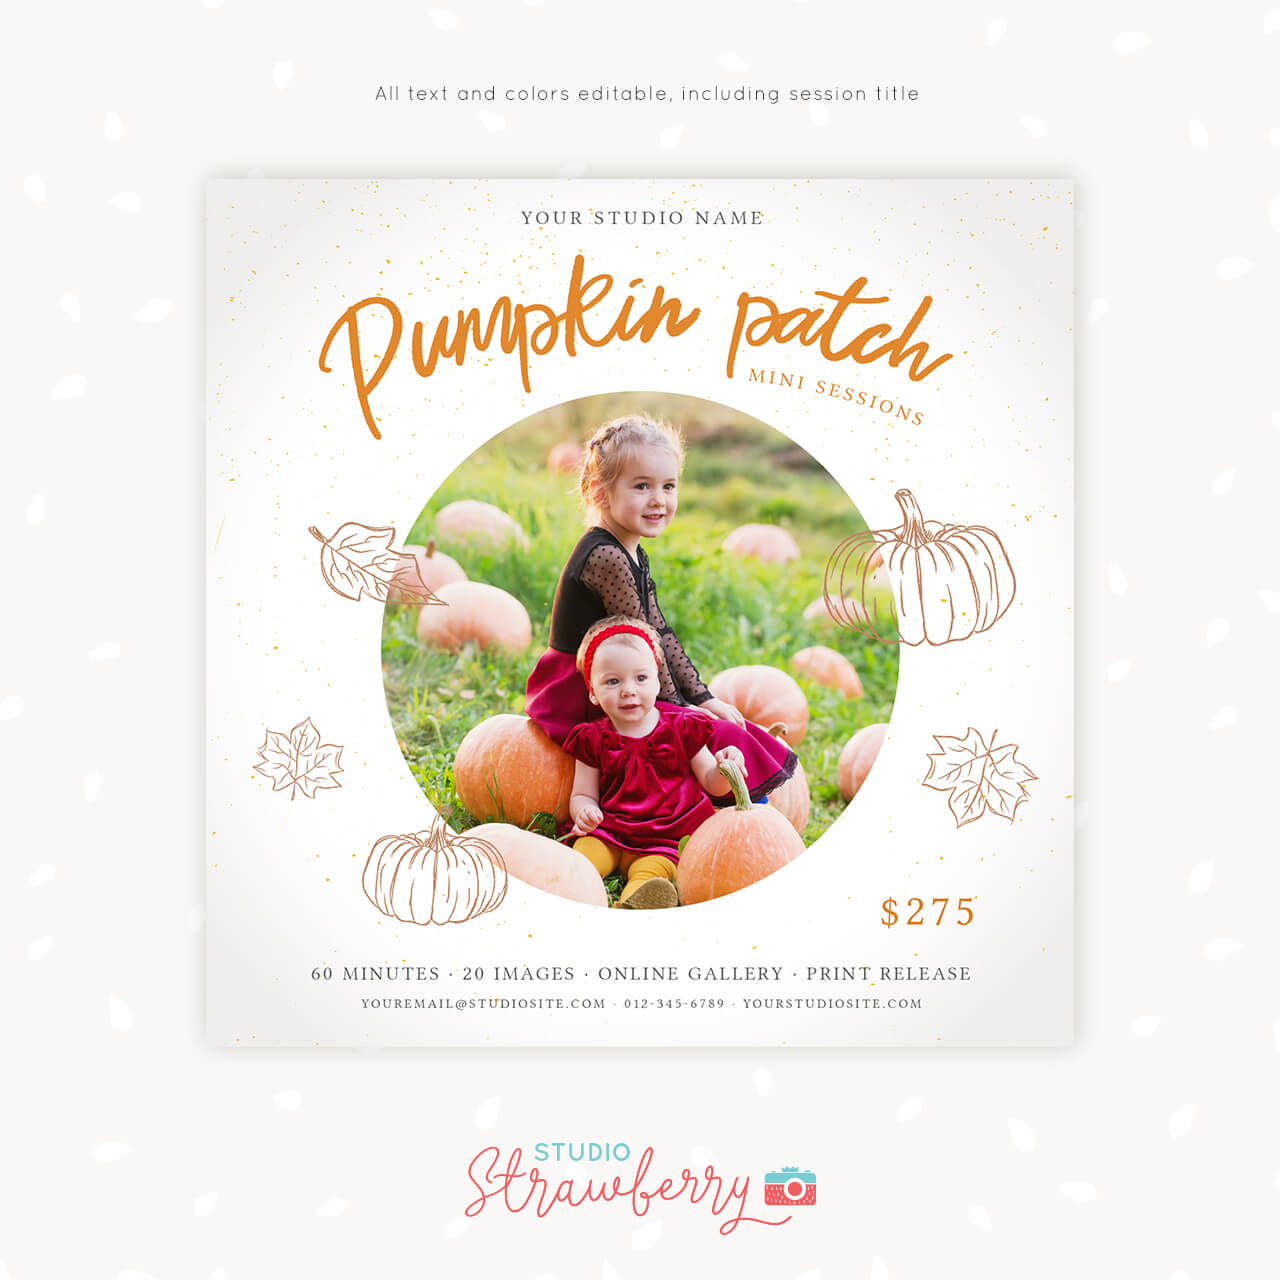 Pumpkin patch mini sessions marketing template